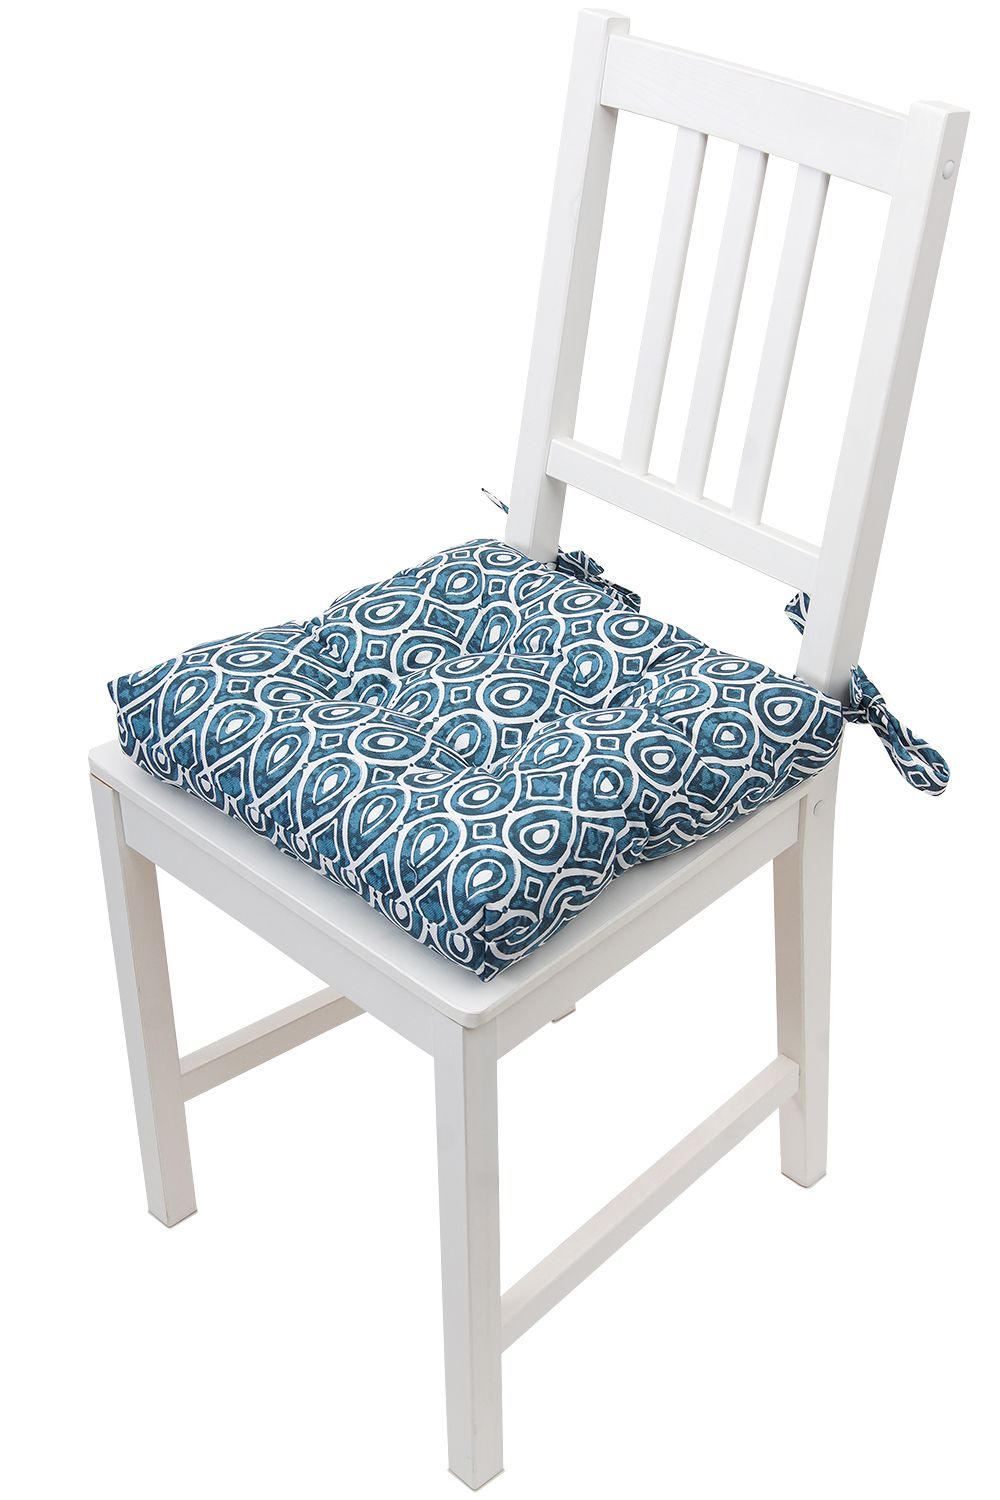 Сидушка на стул с завязками Радушная хозяйка арт.2180 - Орнамент белый